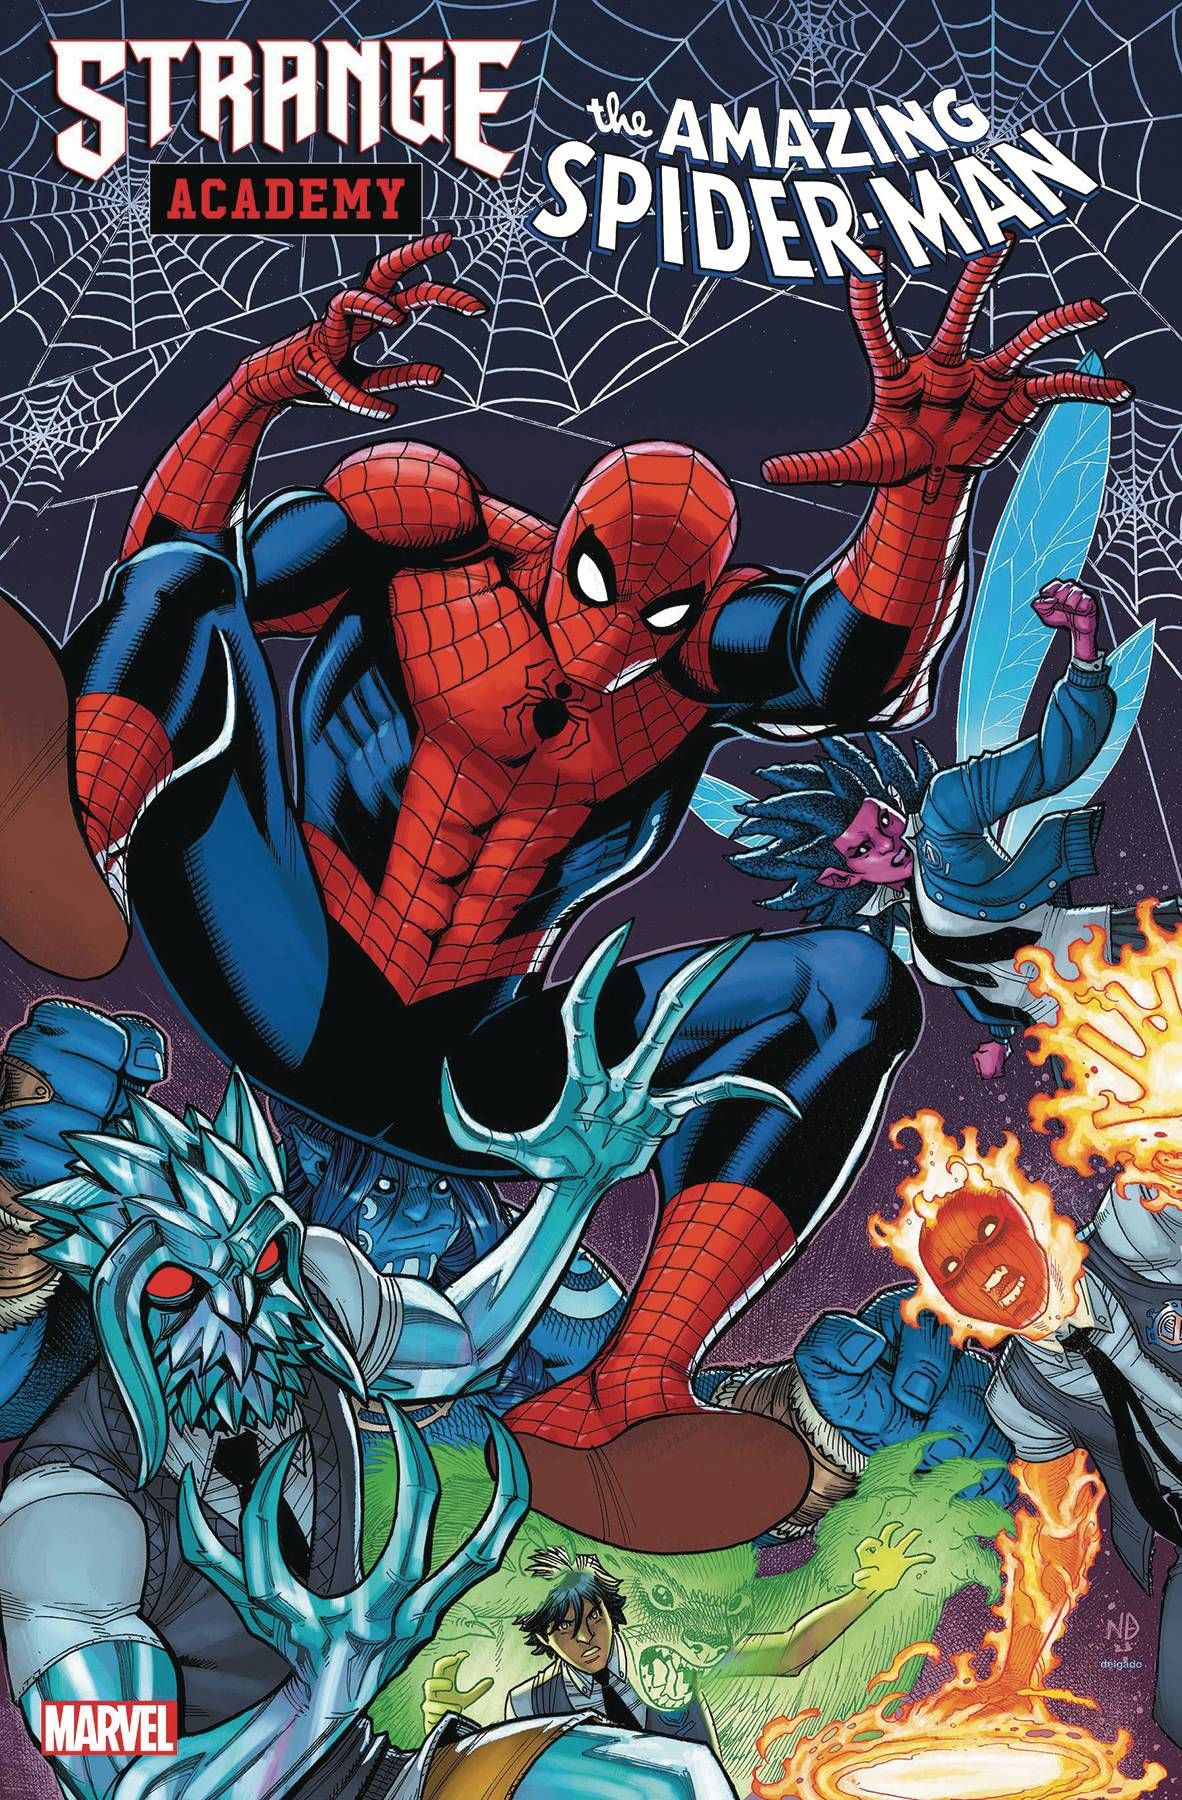 Strange Academy: Amazing Spider-Man #1 Comic